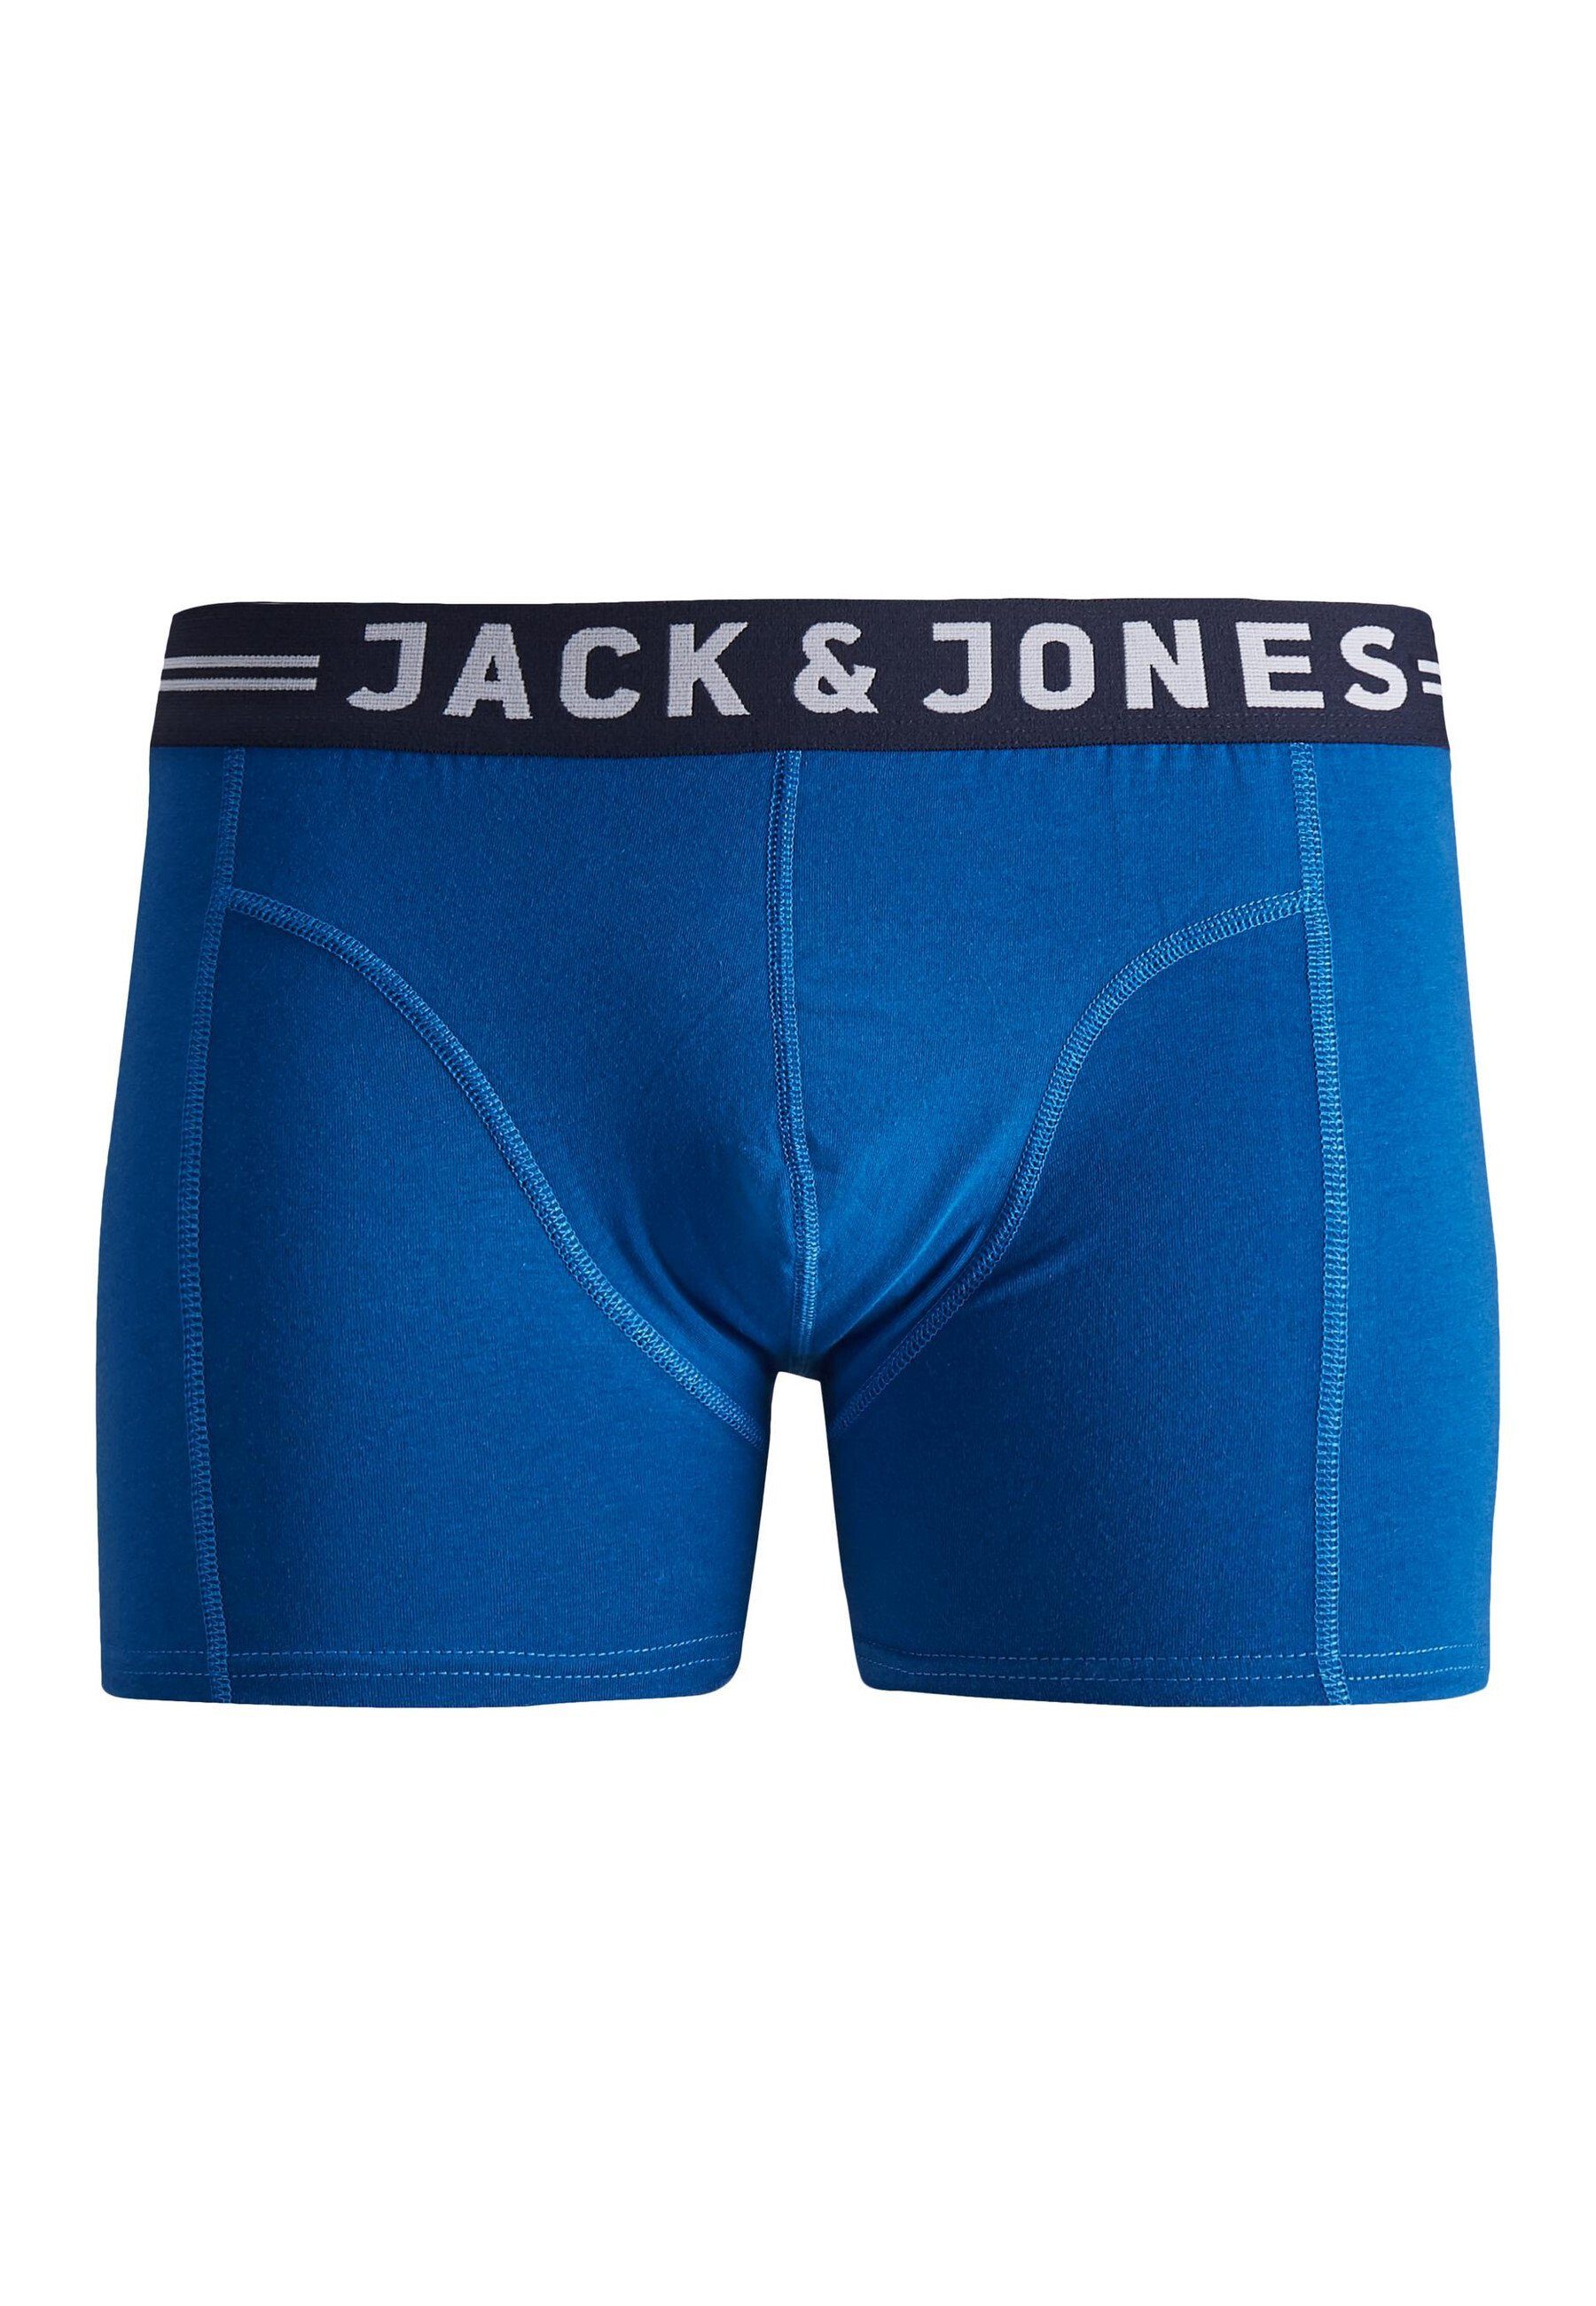 Trunks Color Mix Sense Unterhose Jones Jack Boxershorts & blau